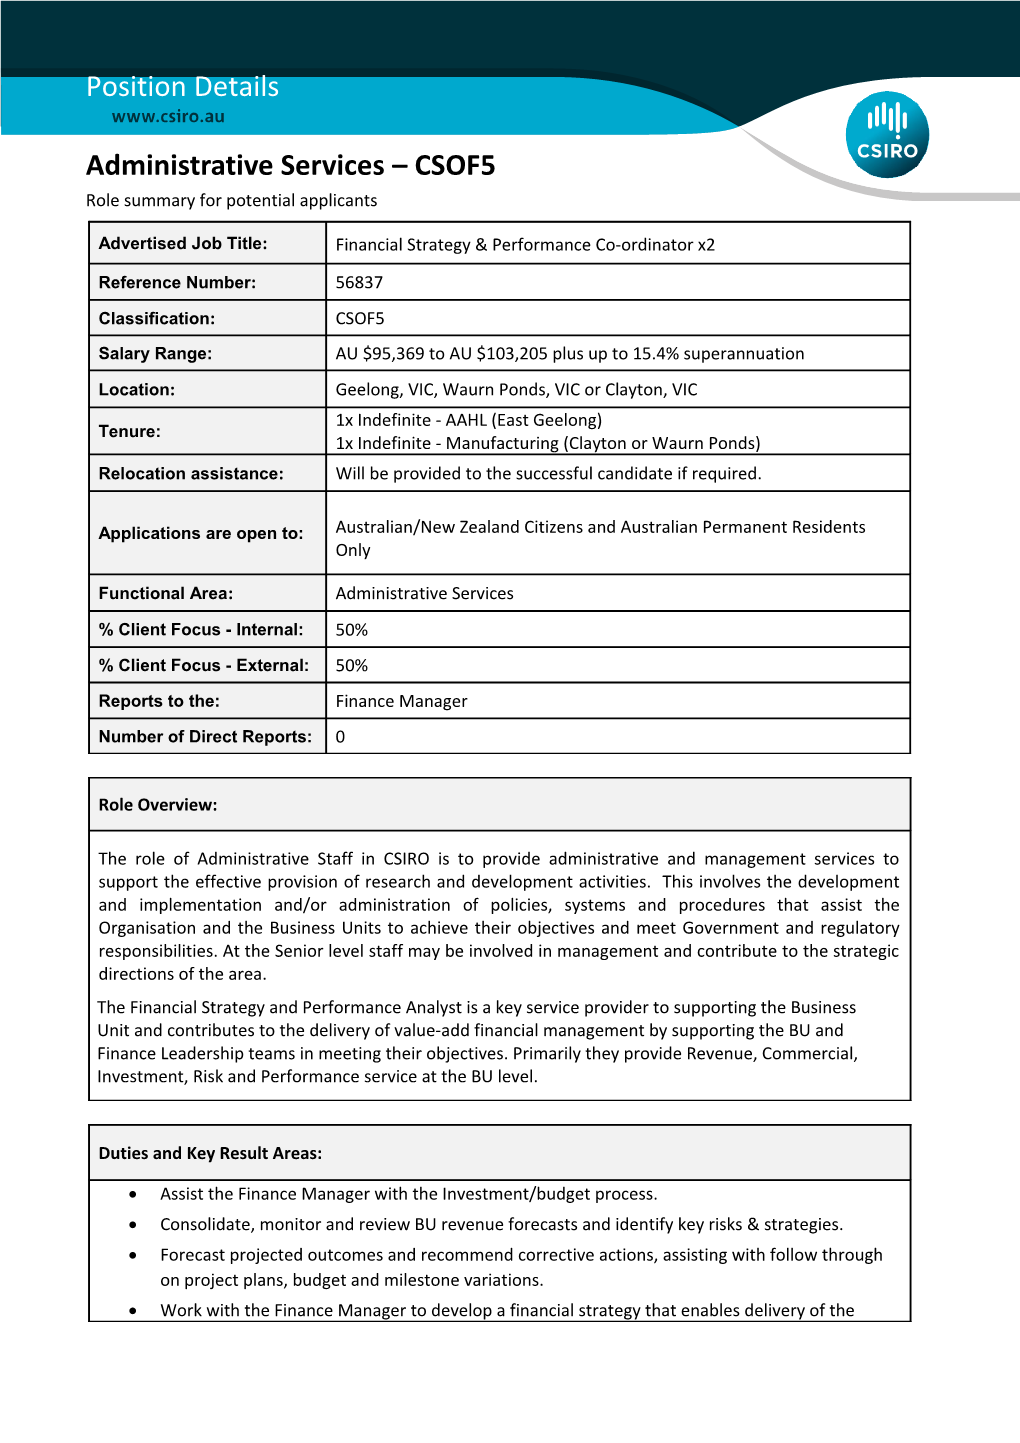 Position Details - Administrative Services - CSOF5